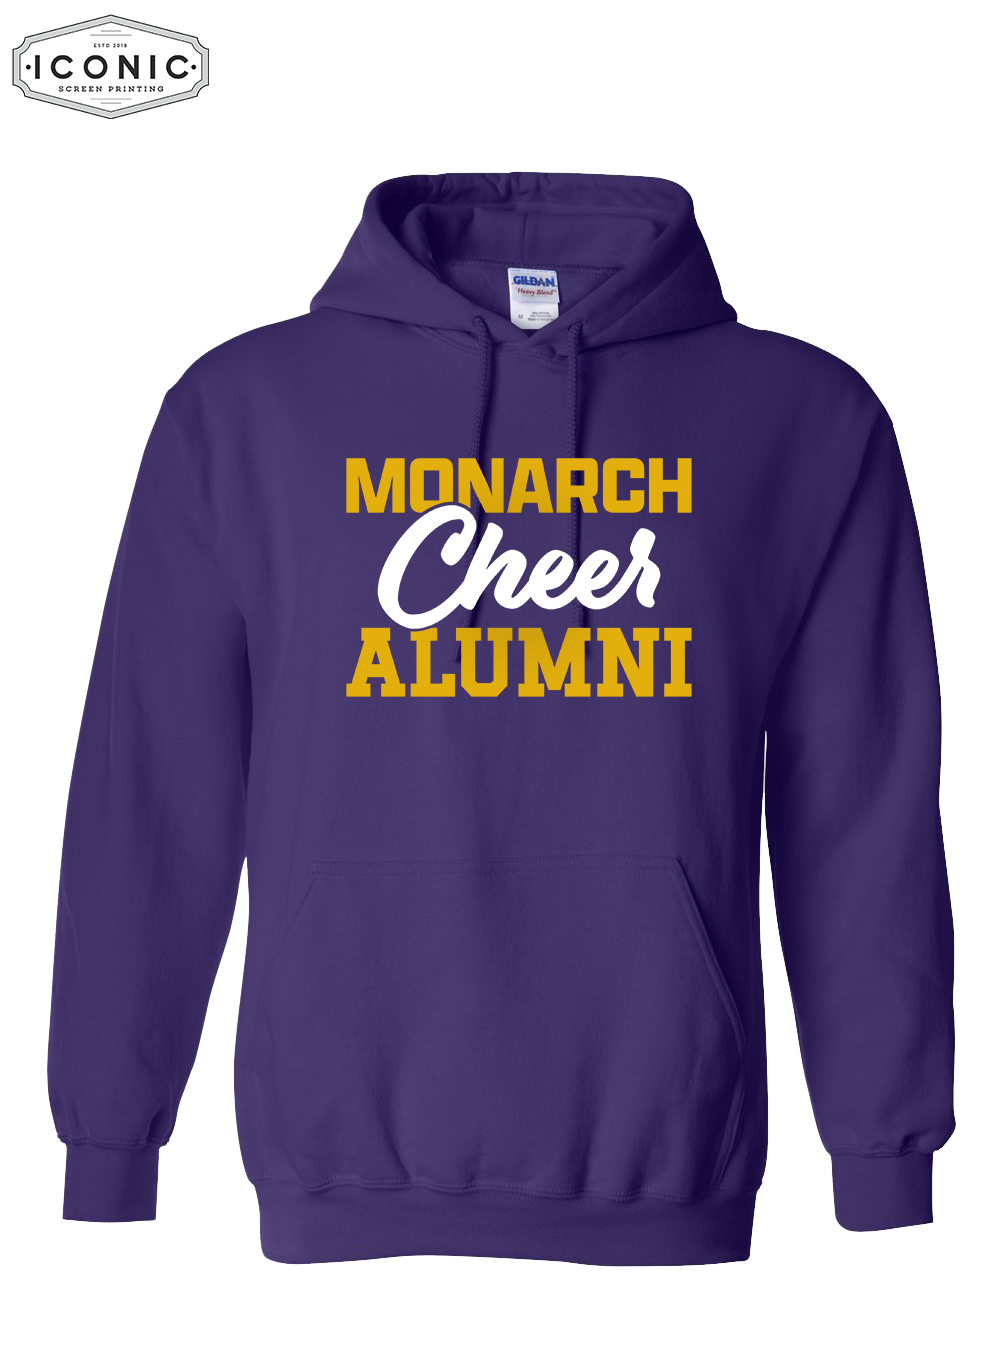 Cheer Alumni - Heavy Blend Hooded Sweatshirt